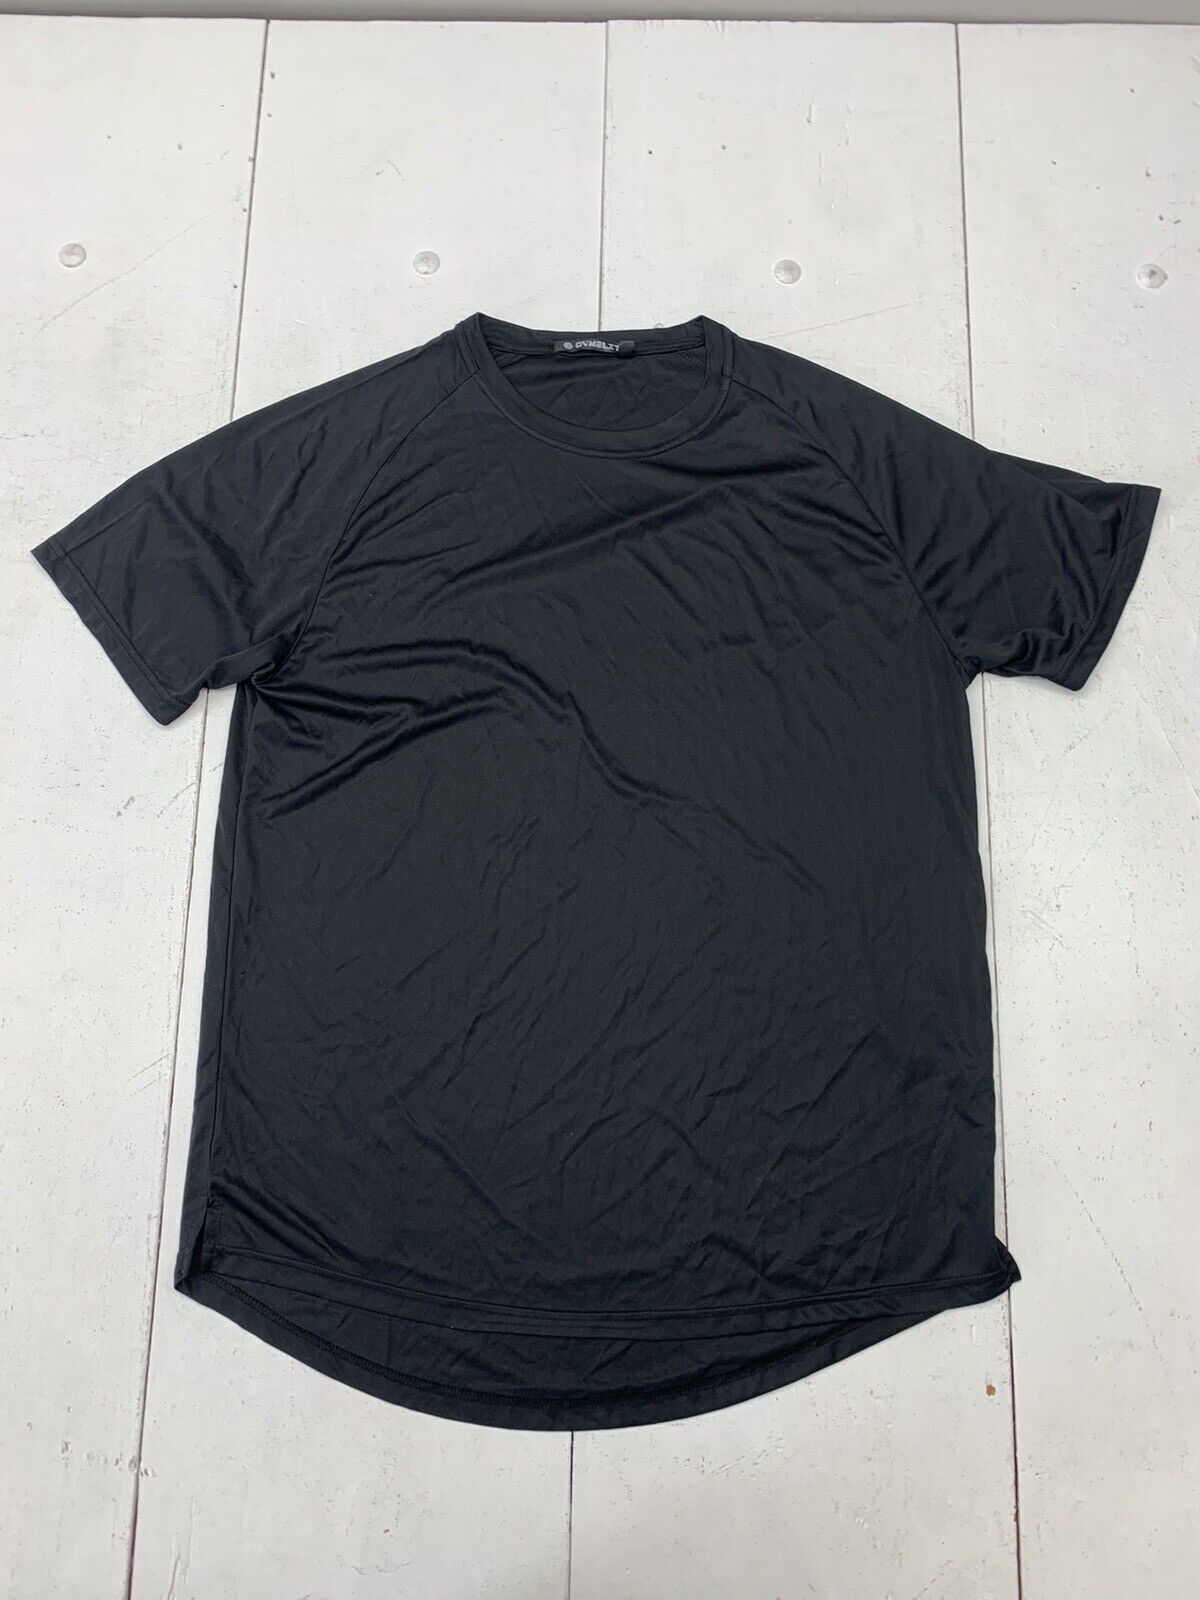 Gym Elite Mens Black Athletic Short Sleeve Shirt Size XL